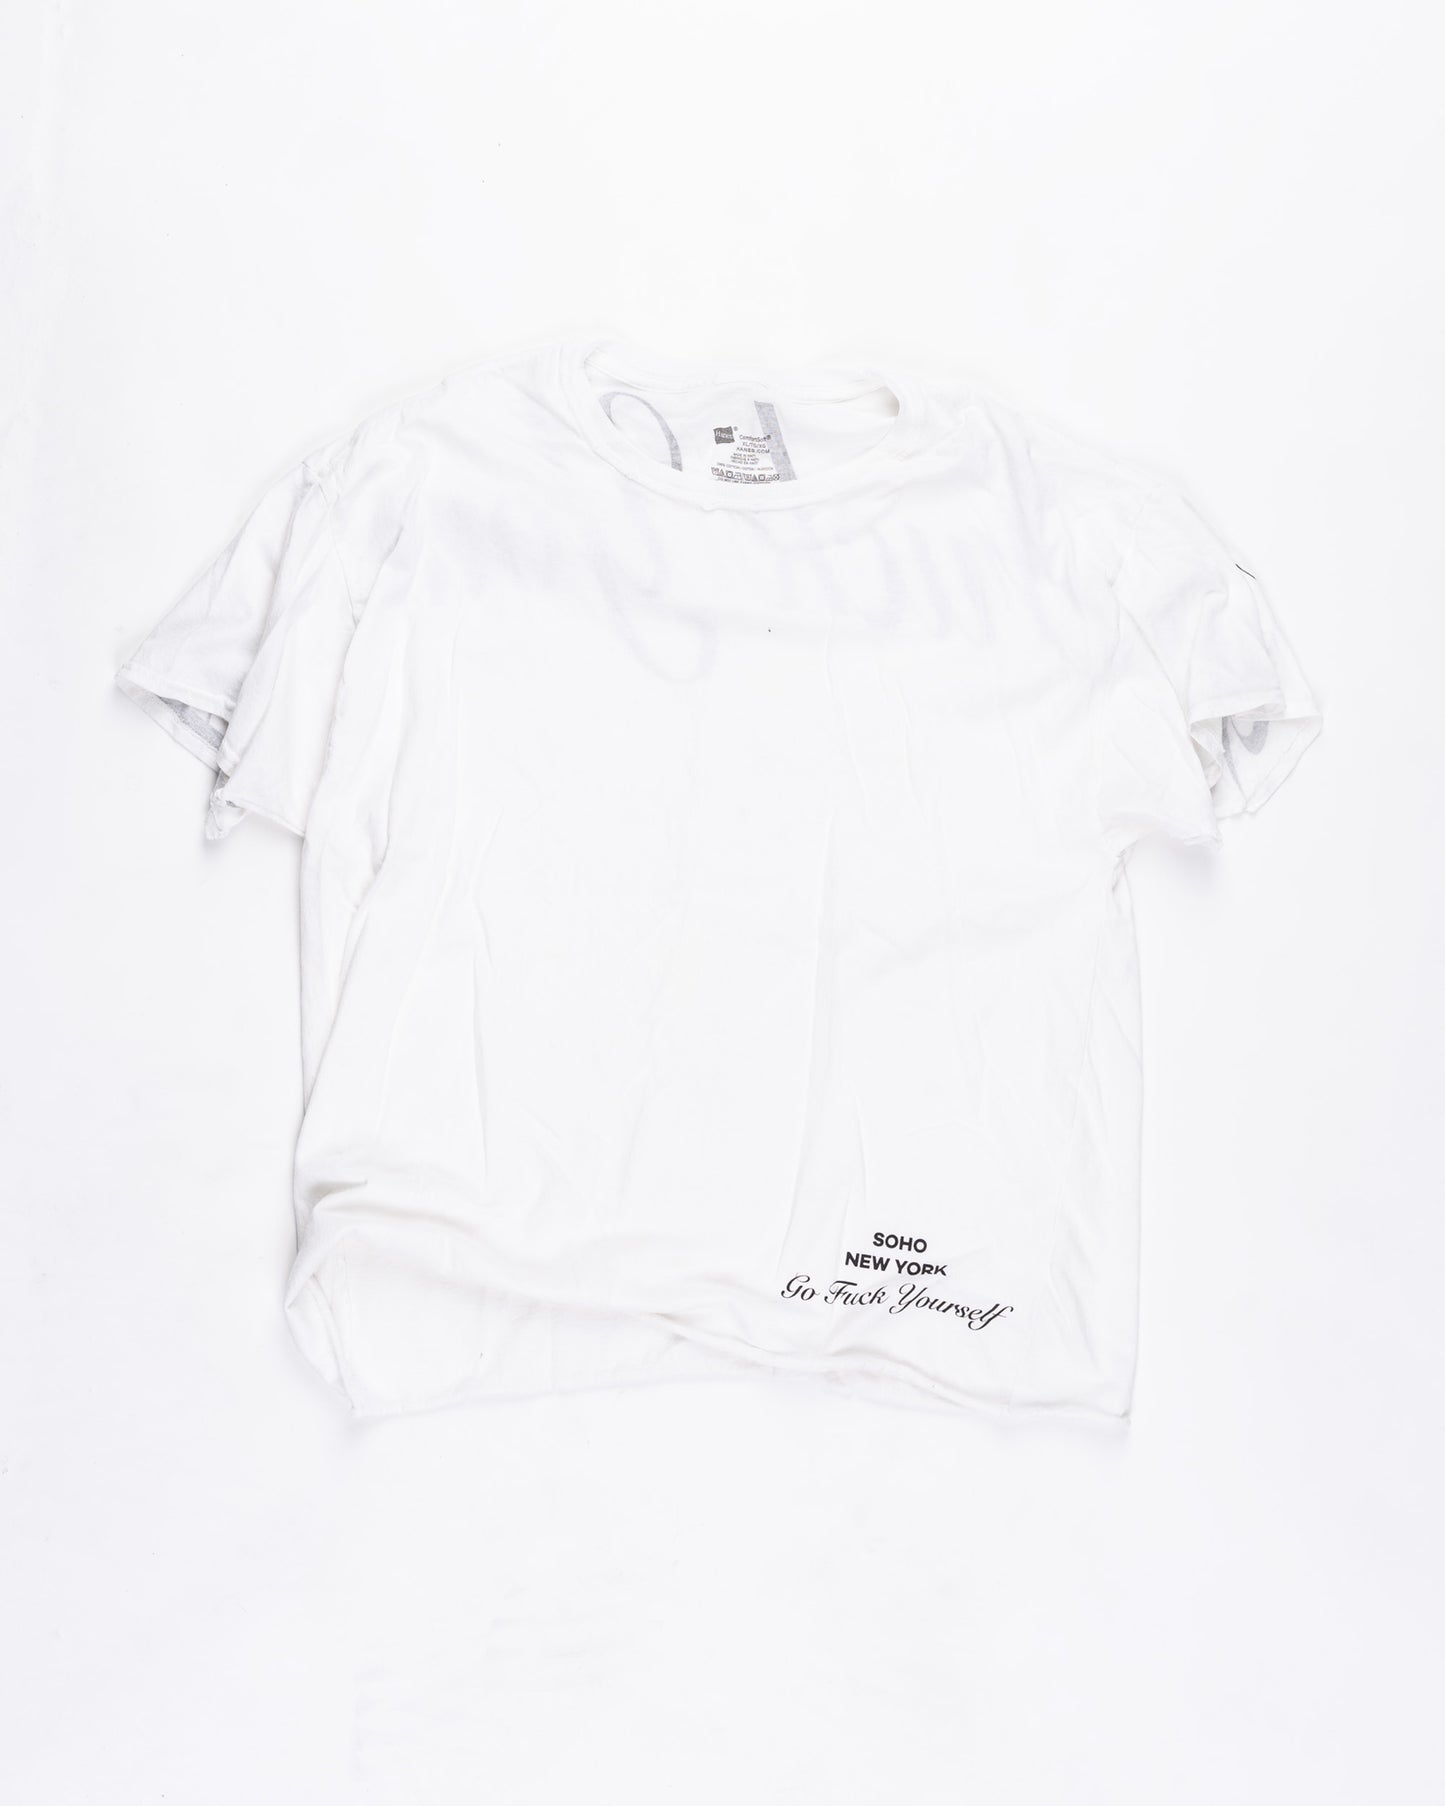 White With Black Print T-Shirt Size: Medium